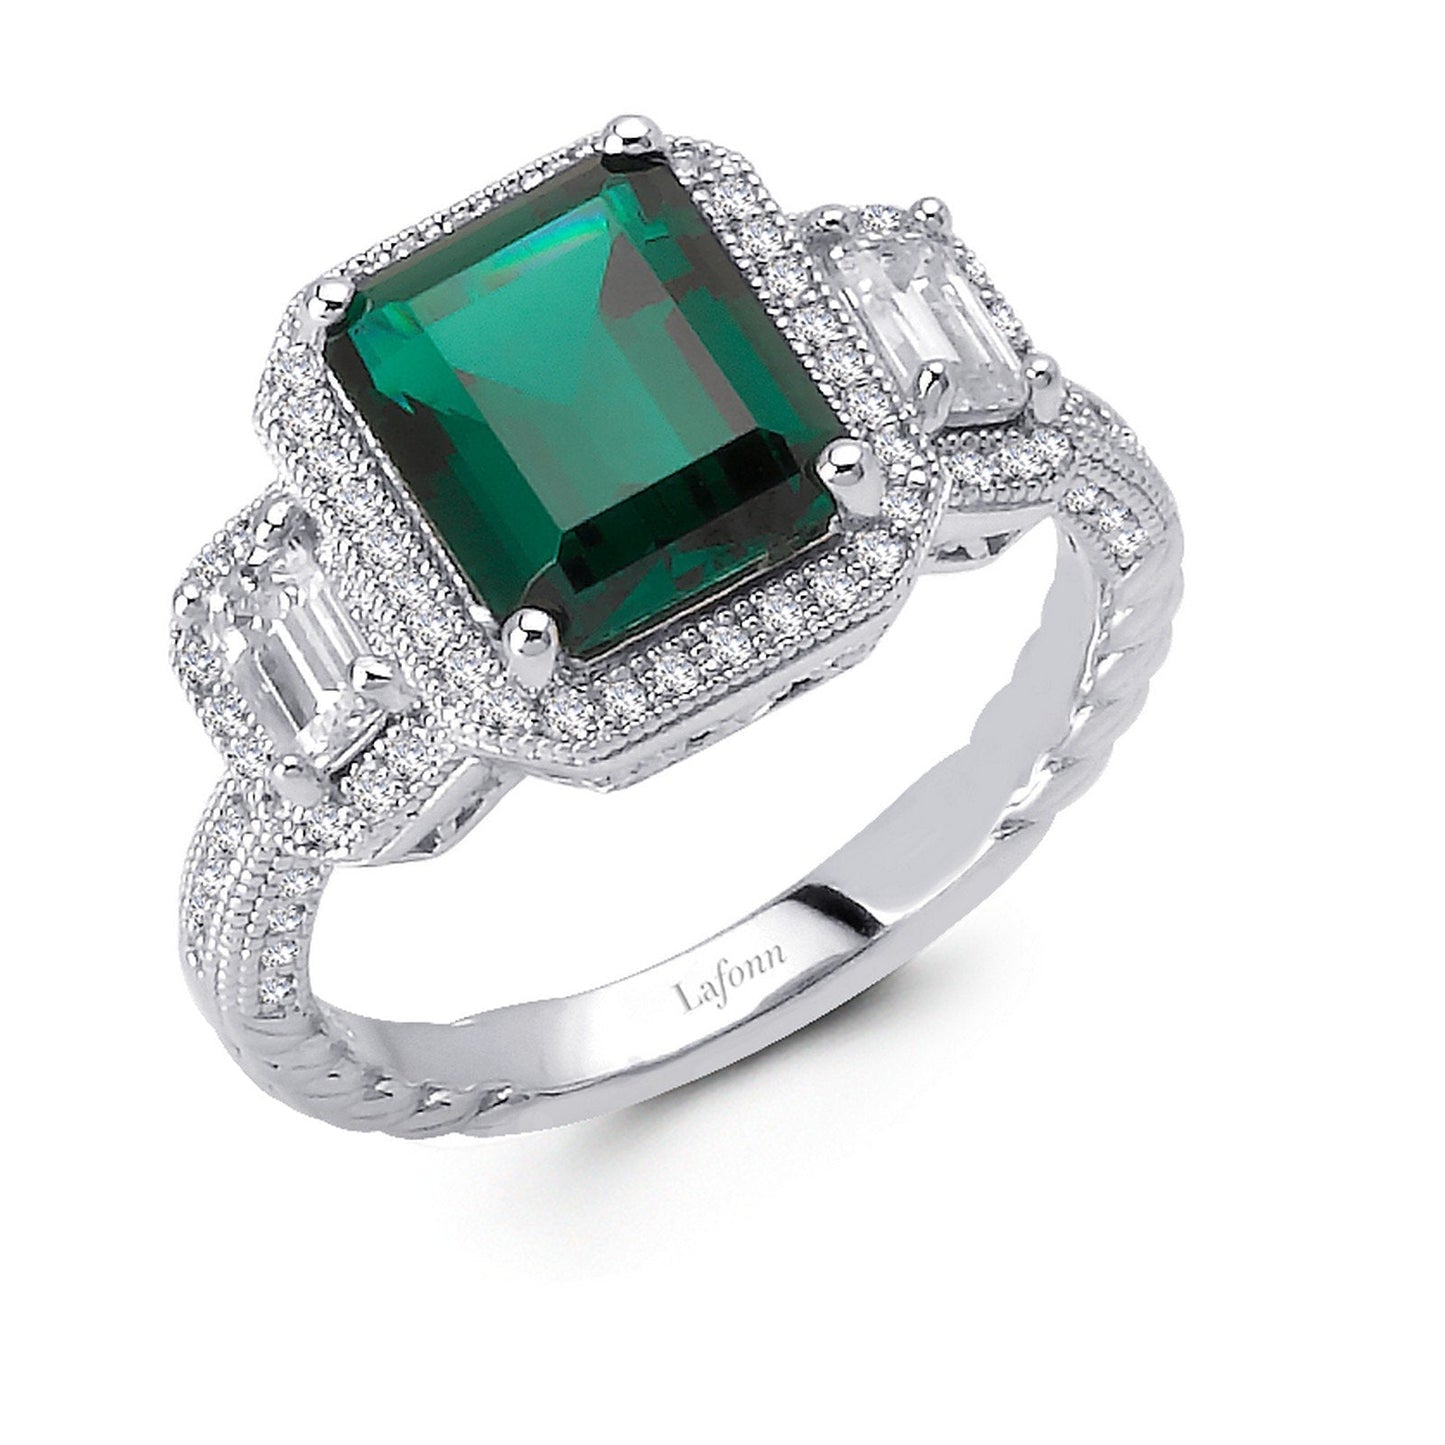 LaFonn Platinum Emerald  10X8mm Emerald, Approx. 3.79 CTW RINGS Three-Stone Anniversary Ring